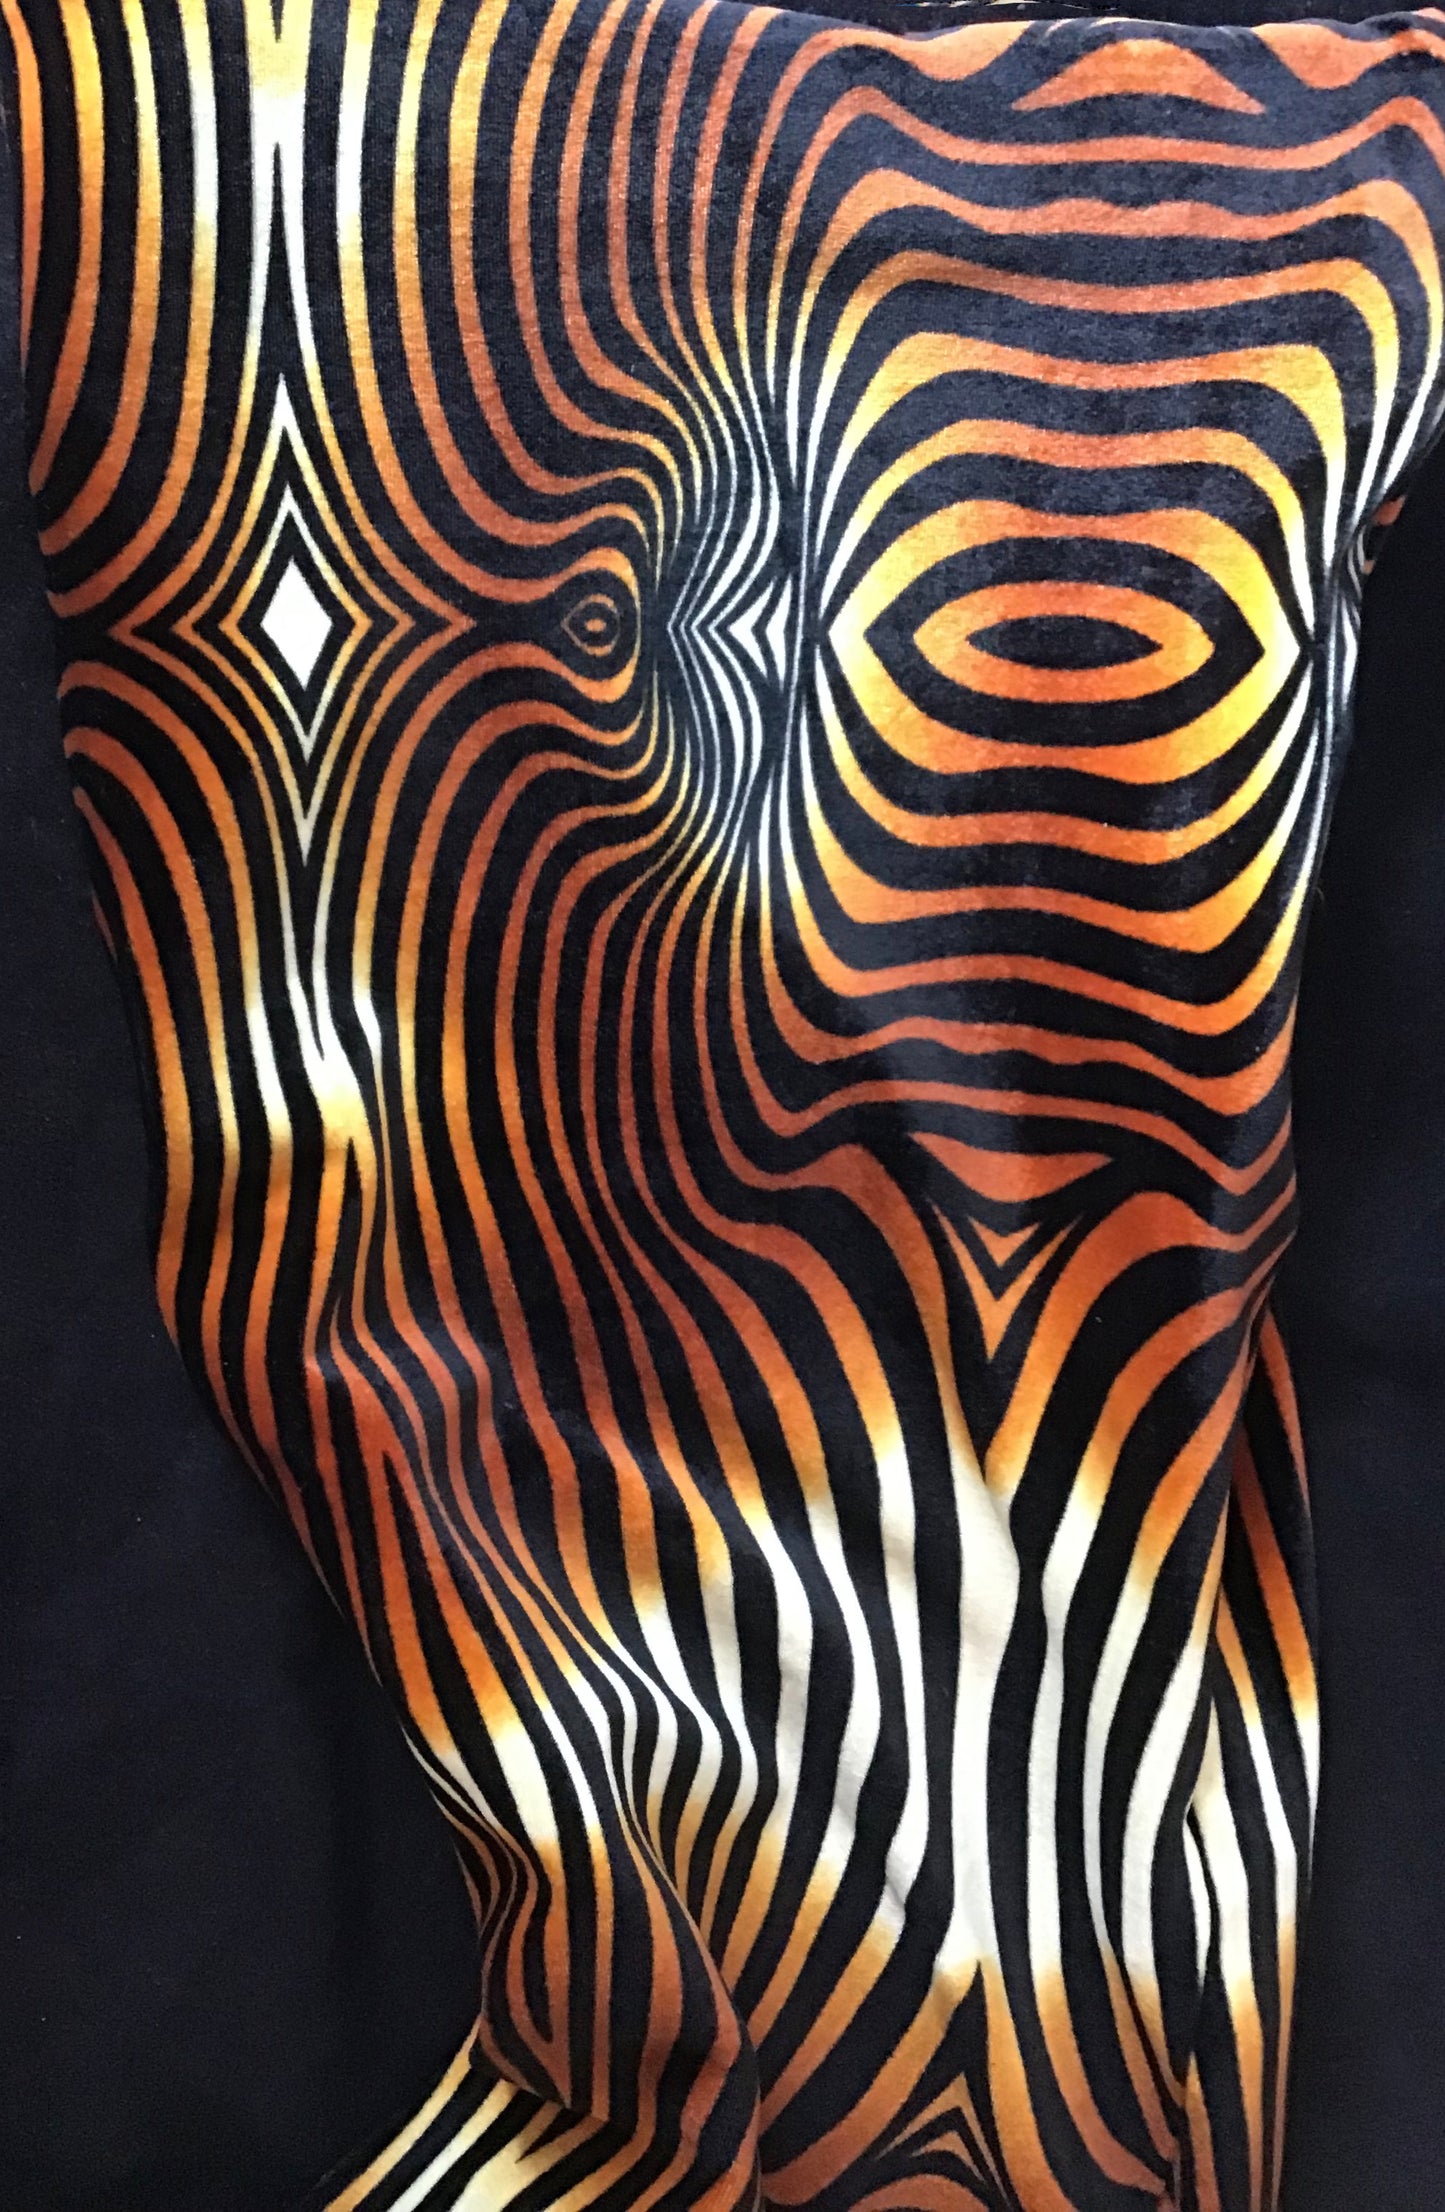 Velvet Twisturban® in "Okapi" pattern